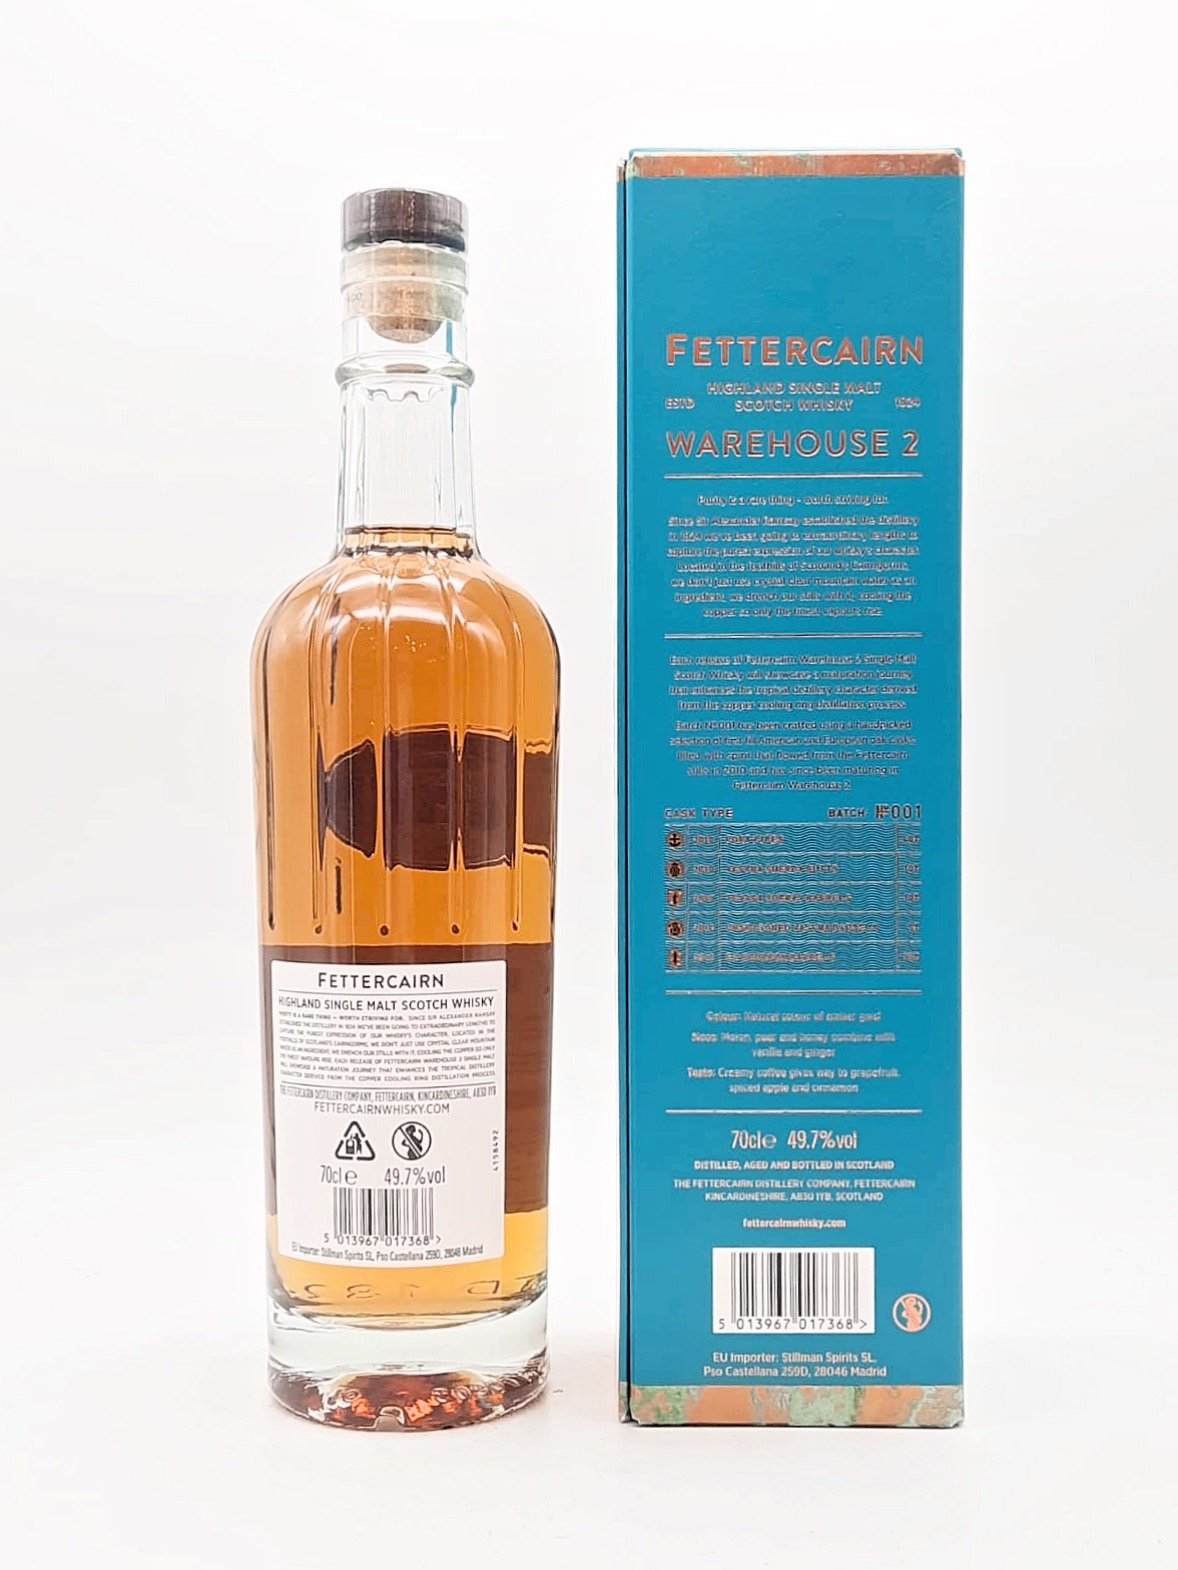 Fettercairn Warehouse 2 Batch 001 2010/2021 Highland Single Malt Scotch Whisky